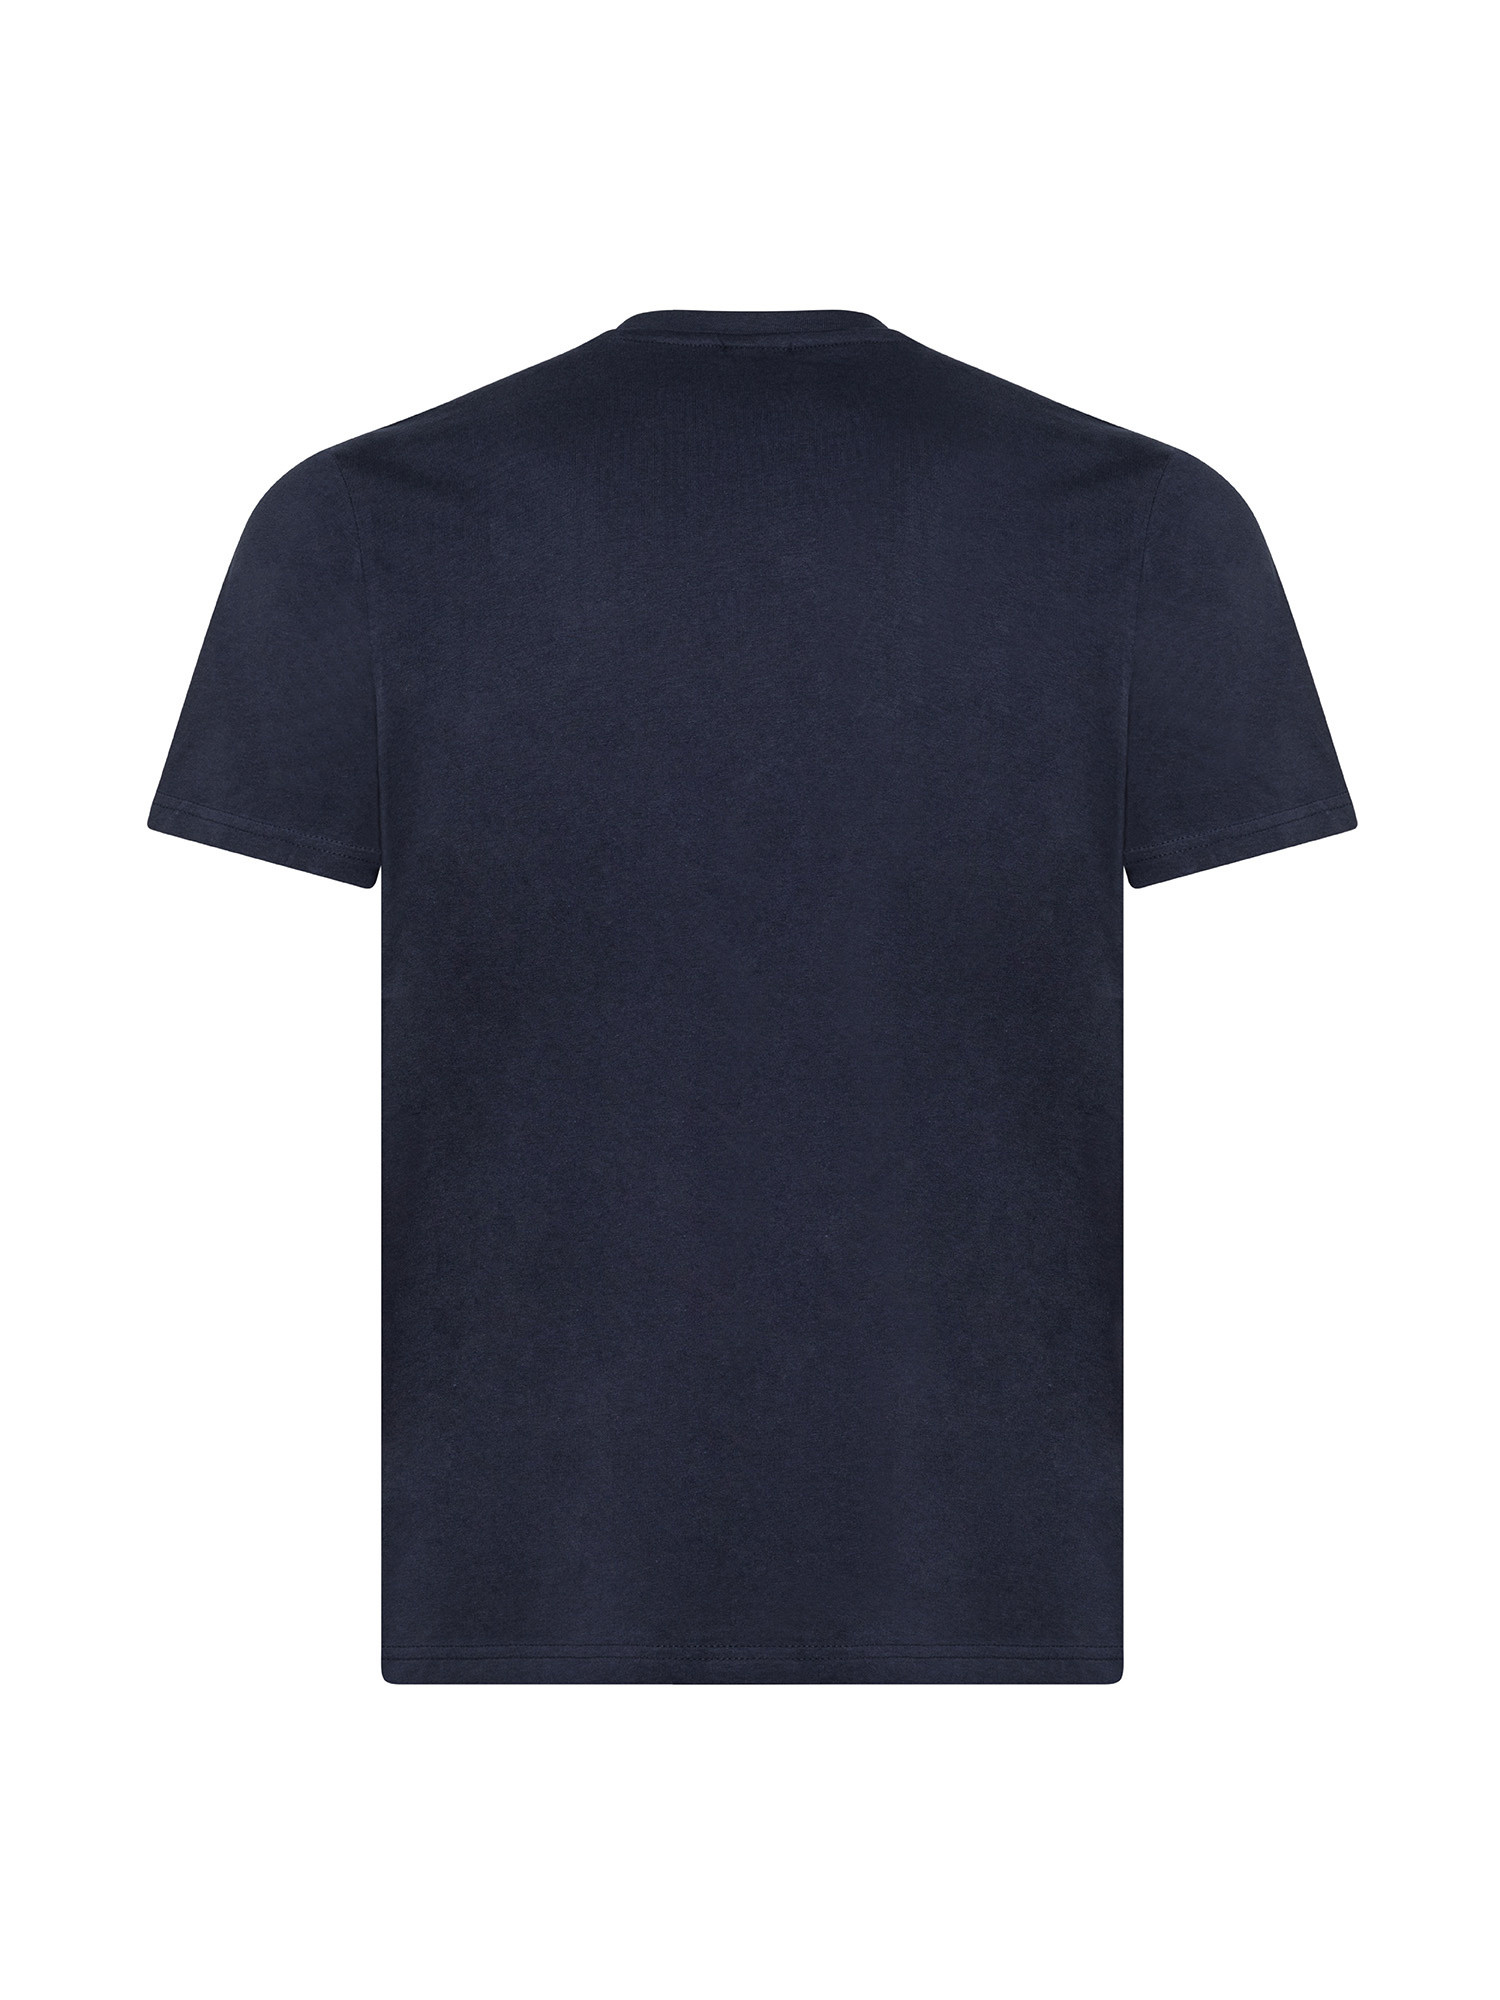 T-shirt a maniche corte con logo, Blu, large image number 1